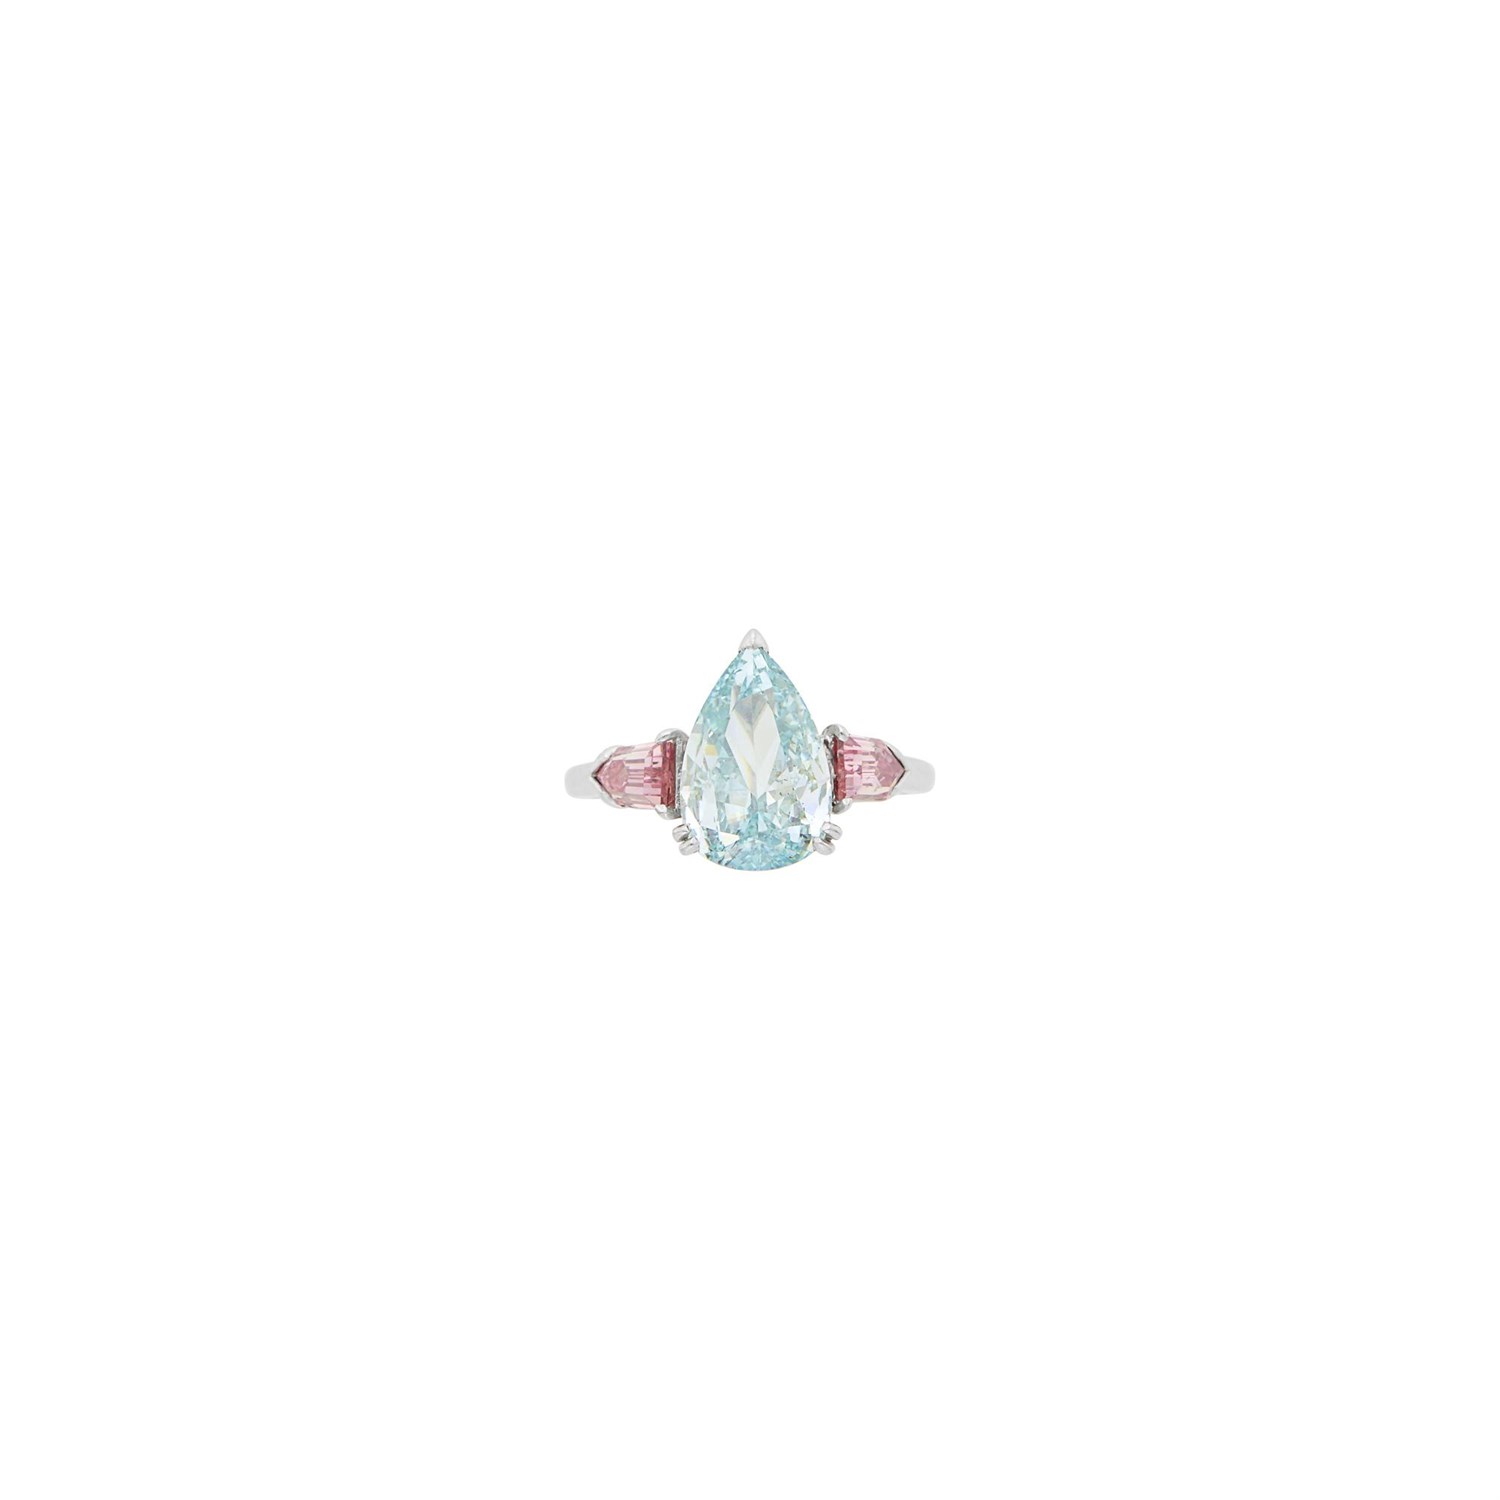 178 - Bulgari Platinum, Fancy Intense Blue-Green and Fancy Intense Pink Diamond Ring